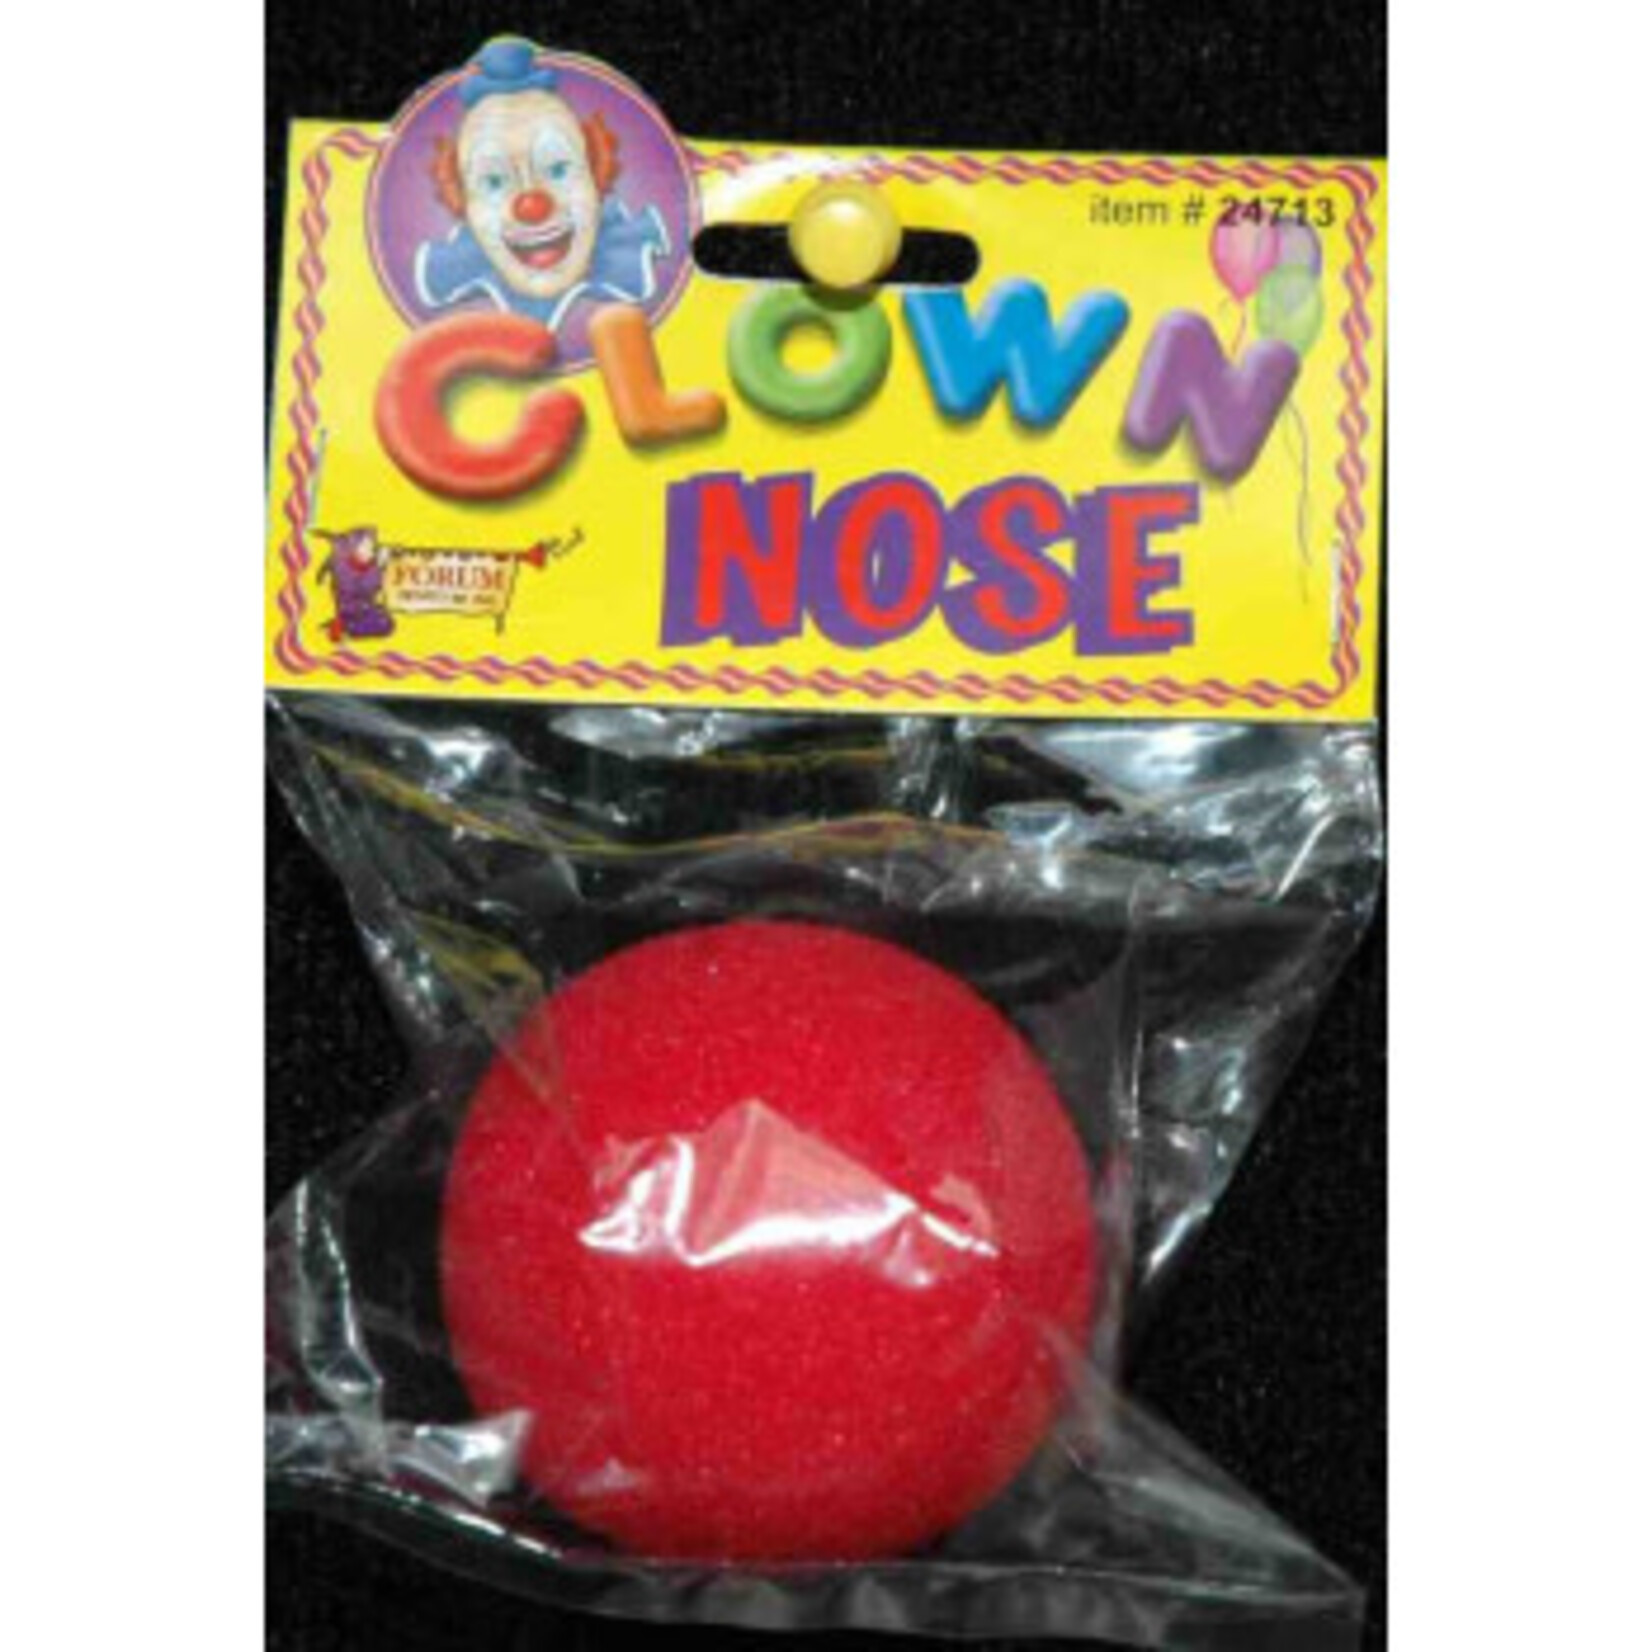 Round Foam Clown Nose - Red